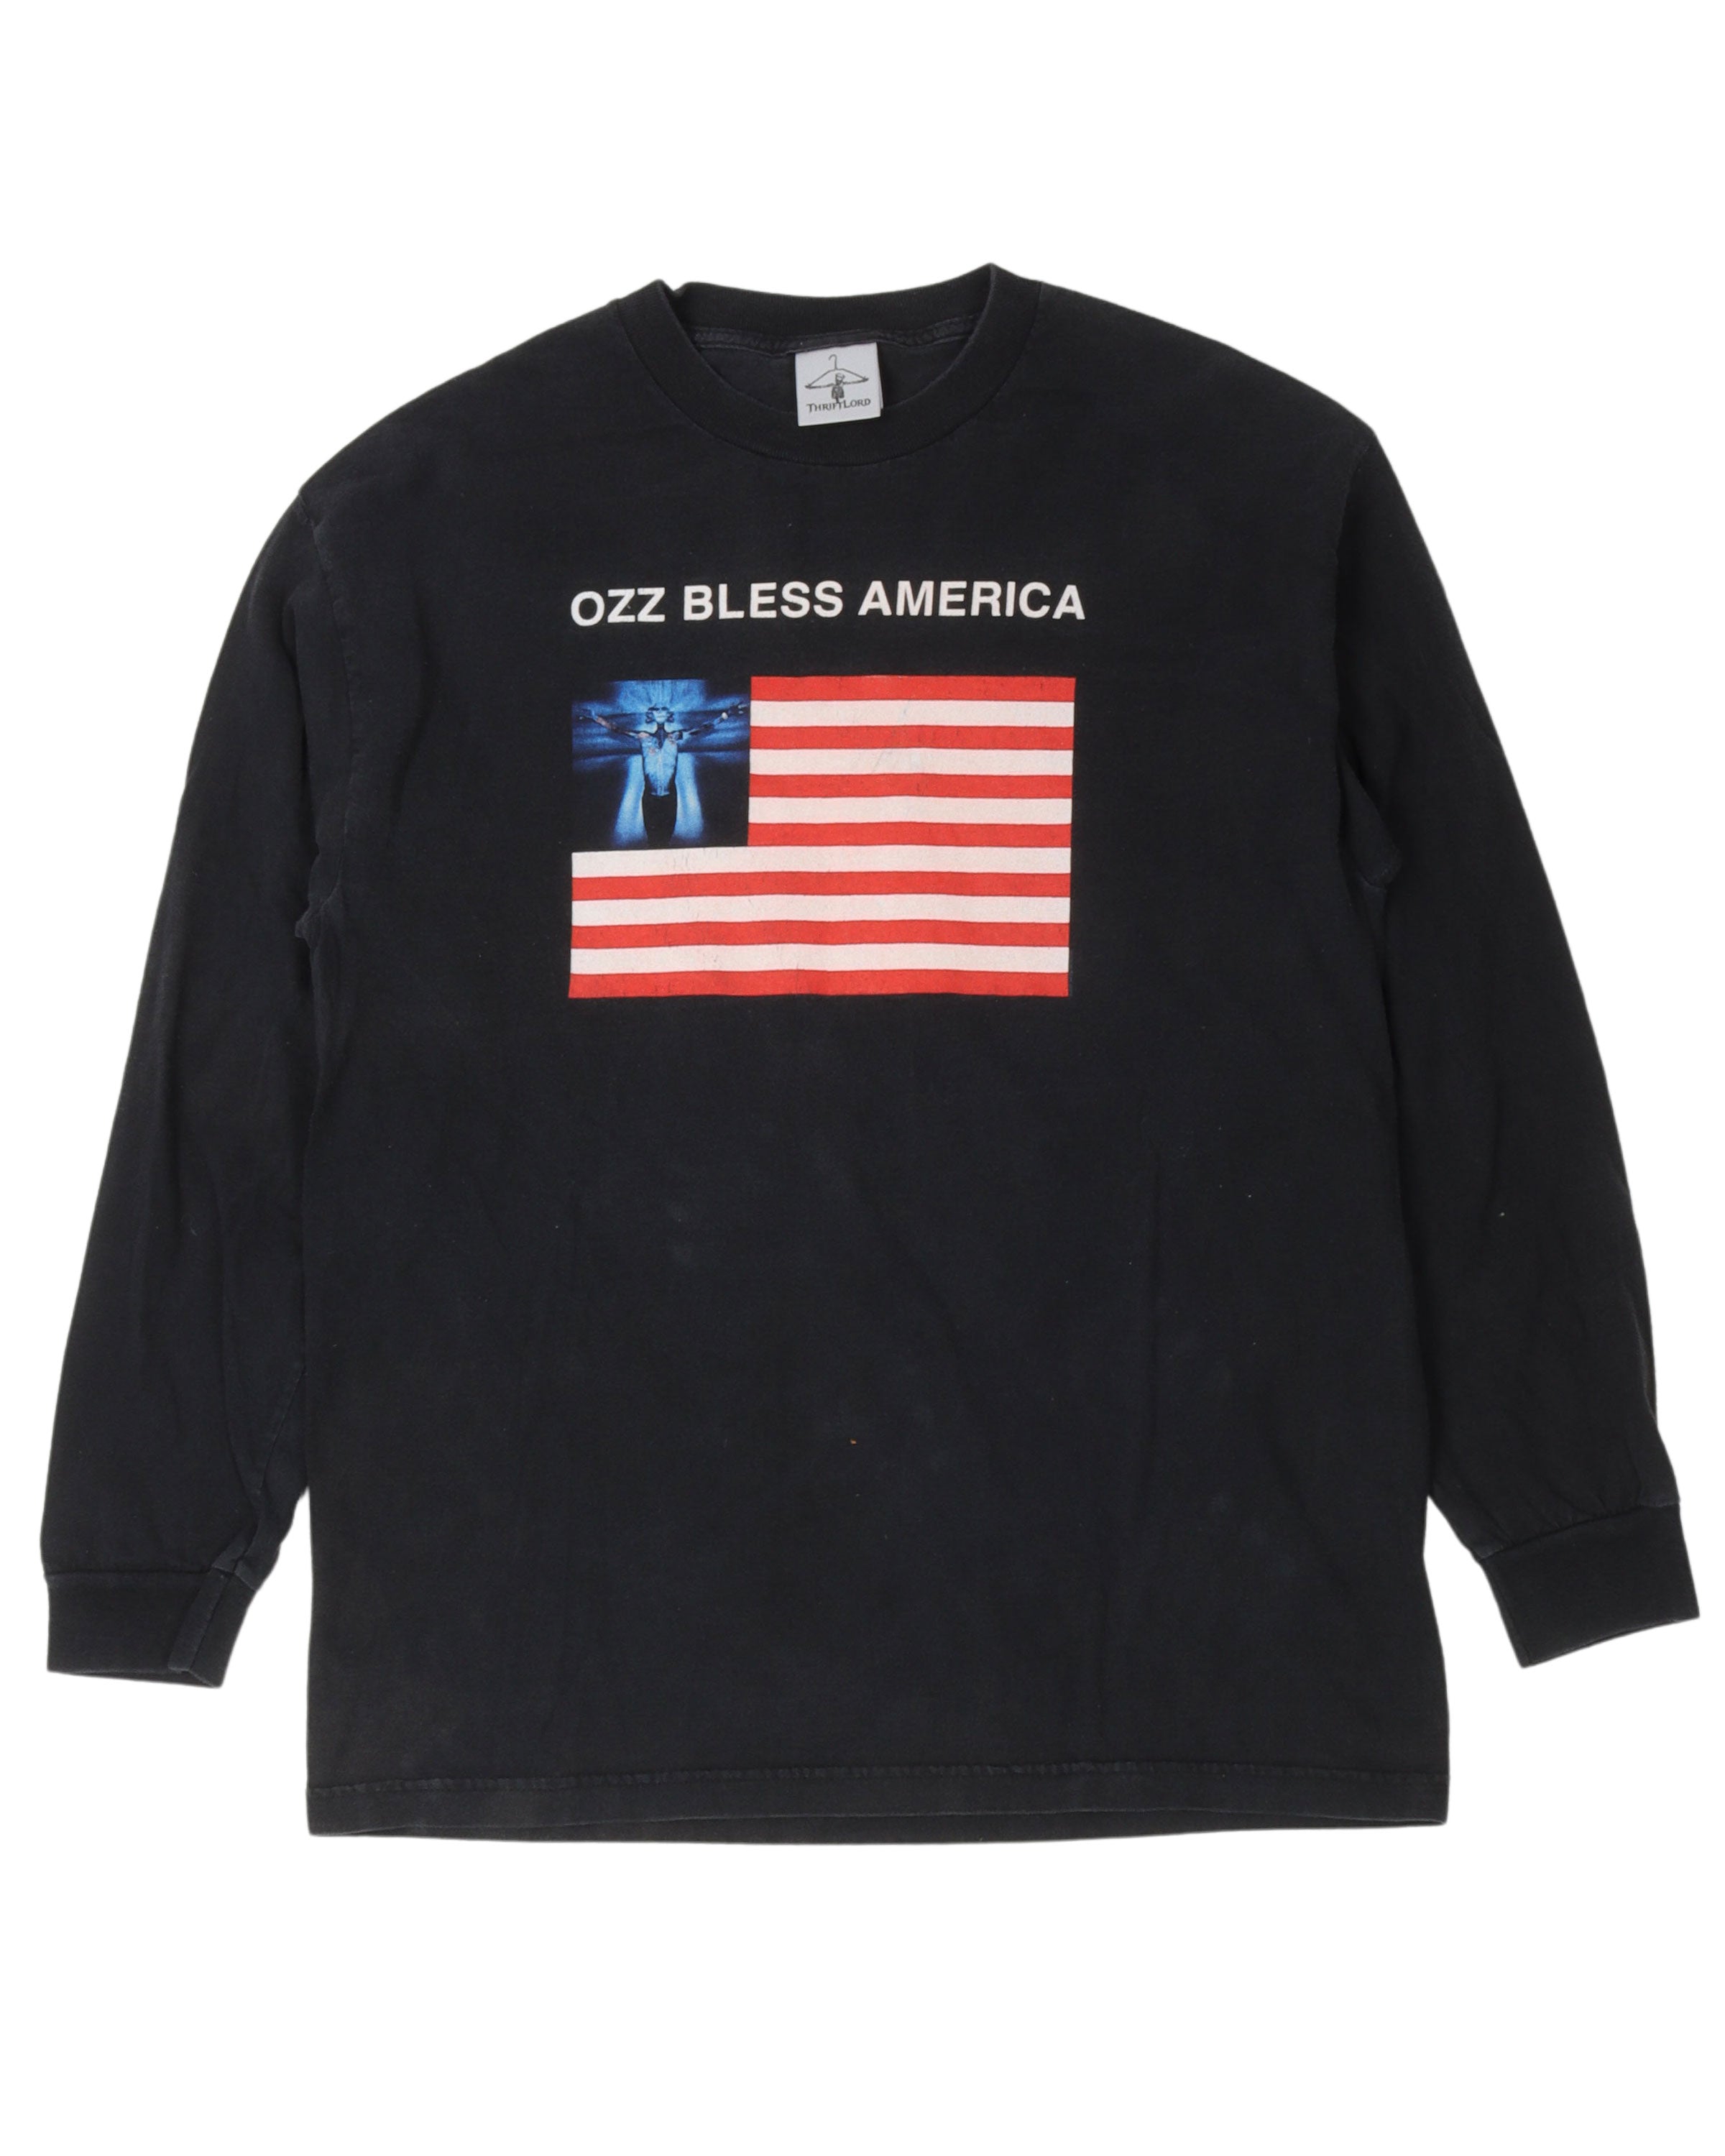 Ozzy Osbourne "Ozz Bless America" Long Sleeve T-Shirt